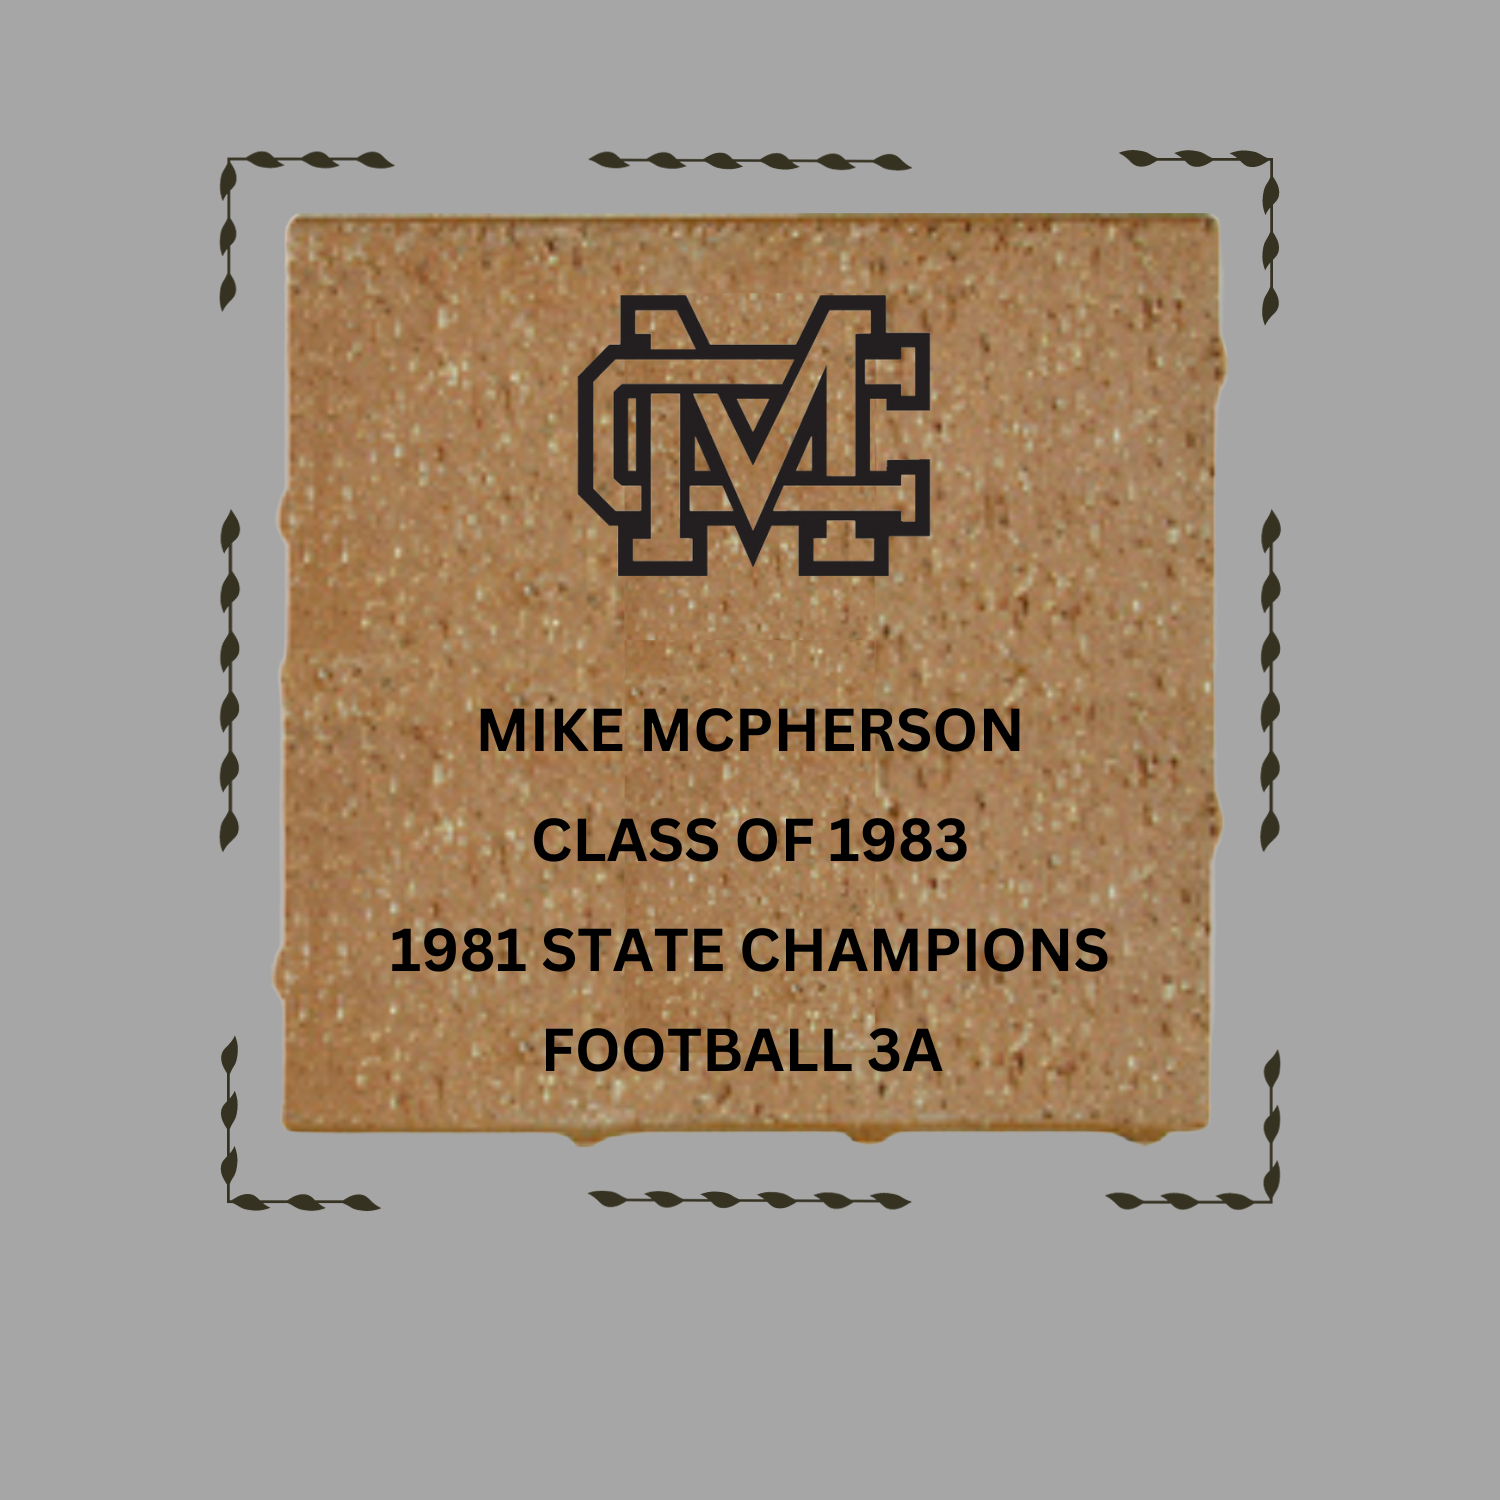 Mike Mcpherson